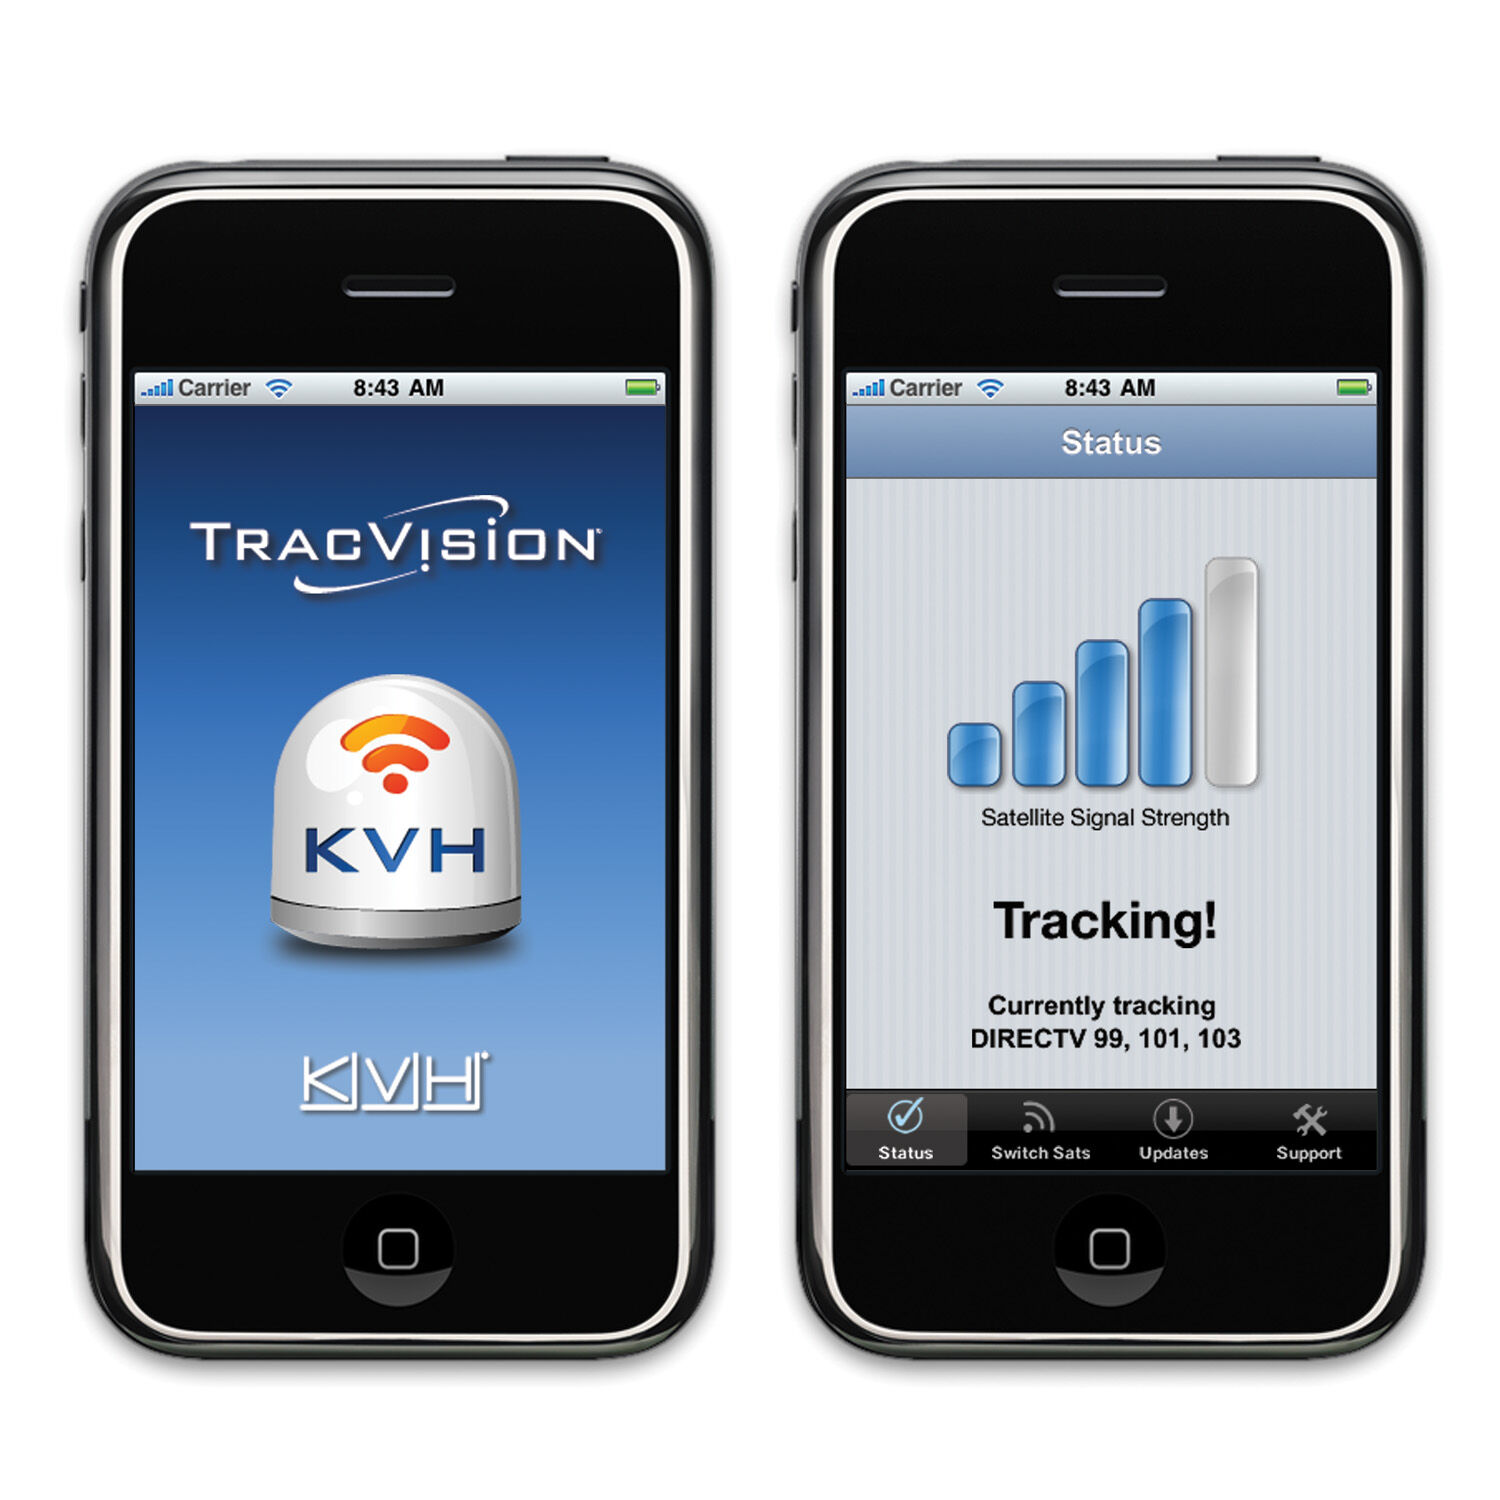 KVH TracVision TV5 mit IP-TV-Hub B